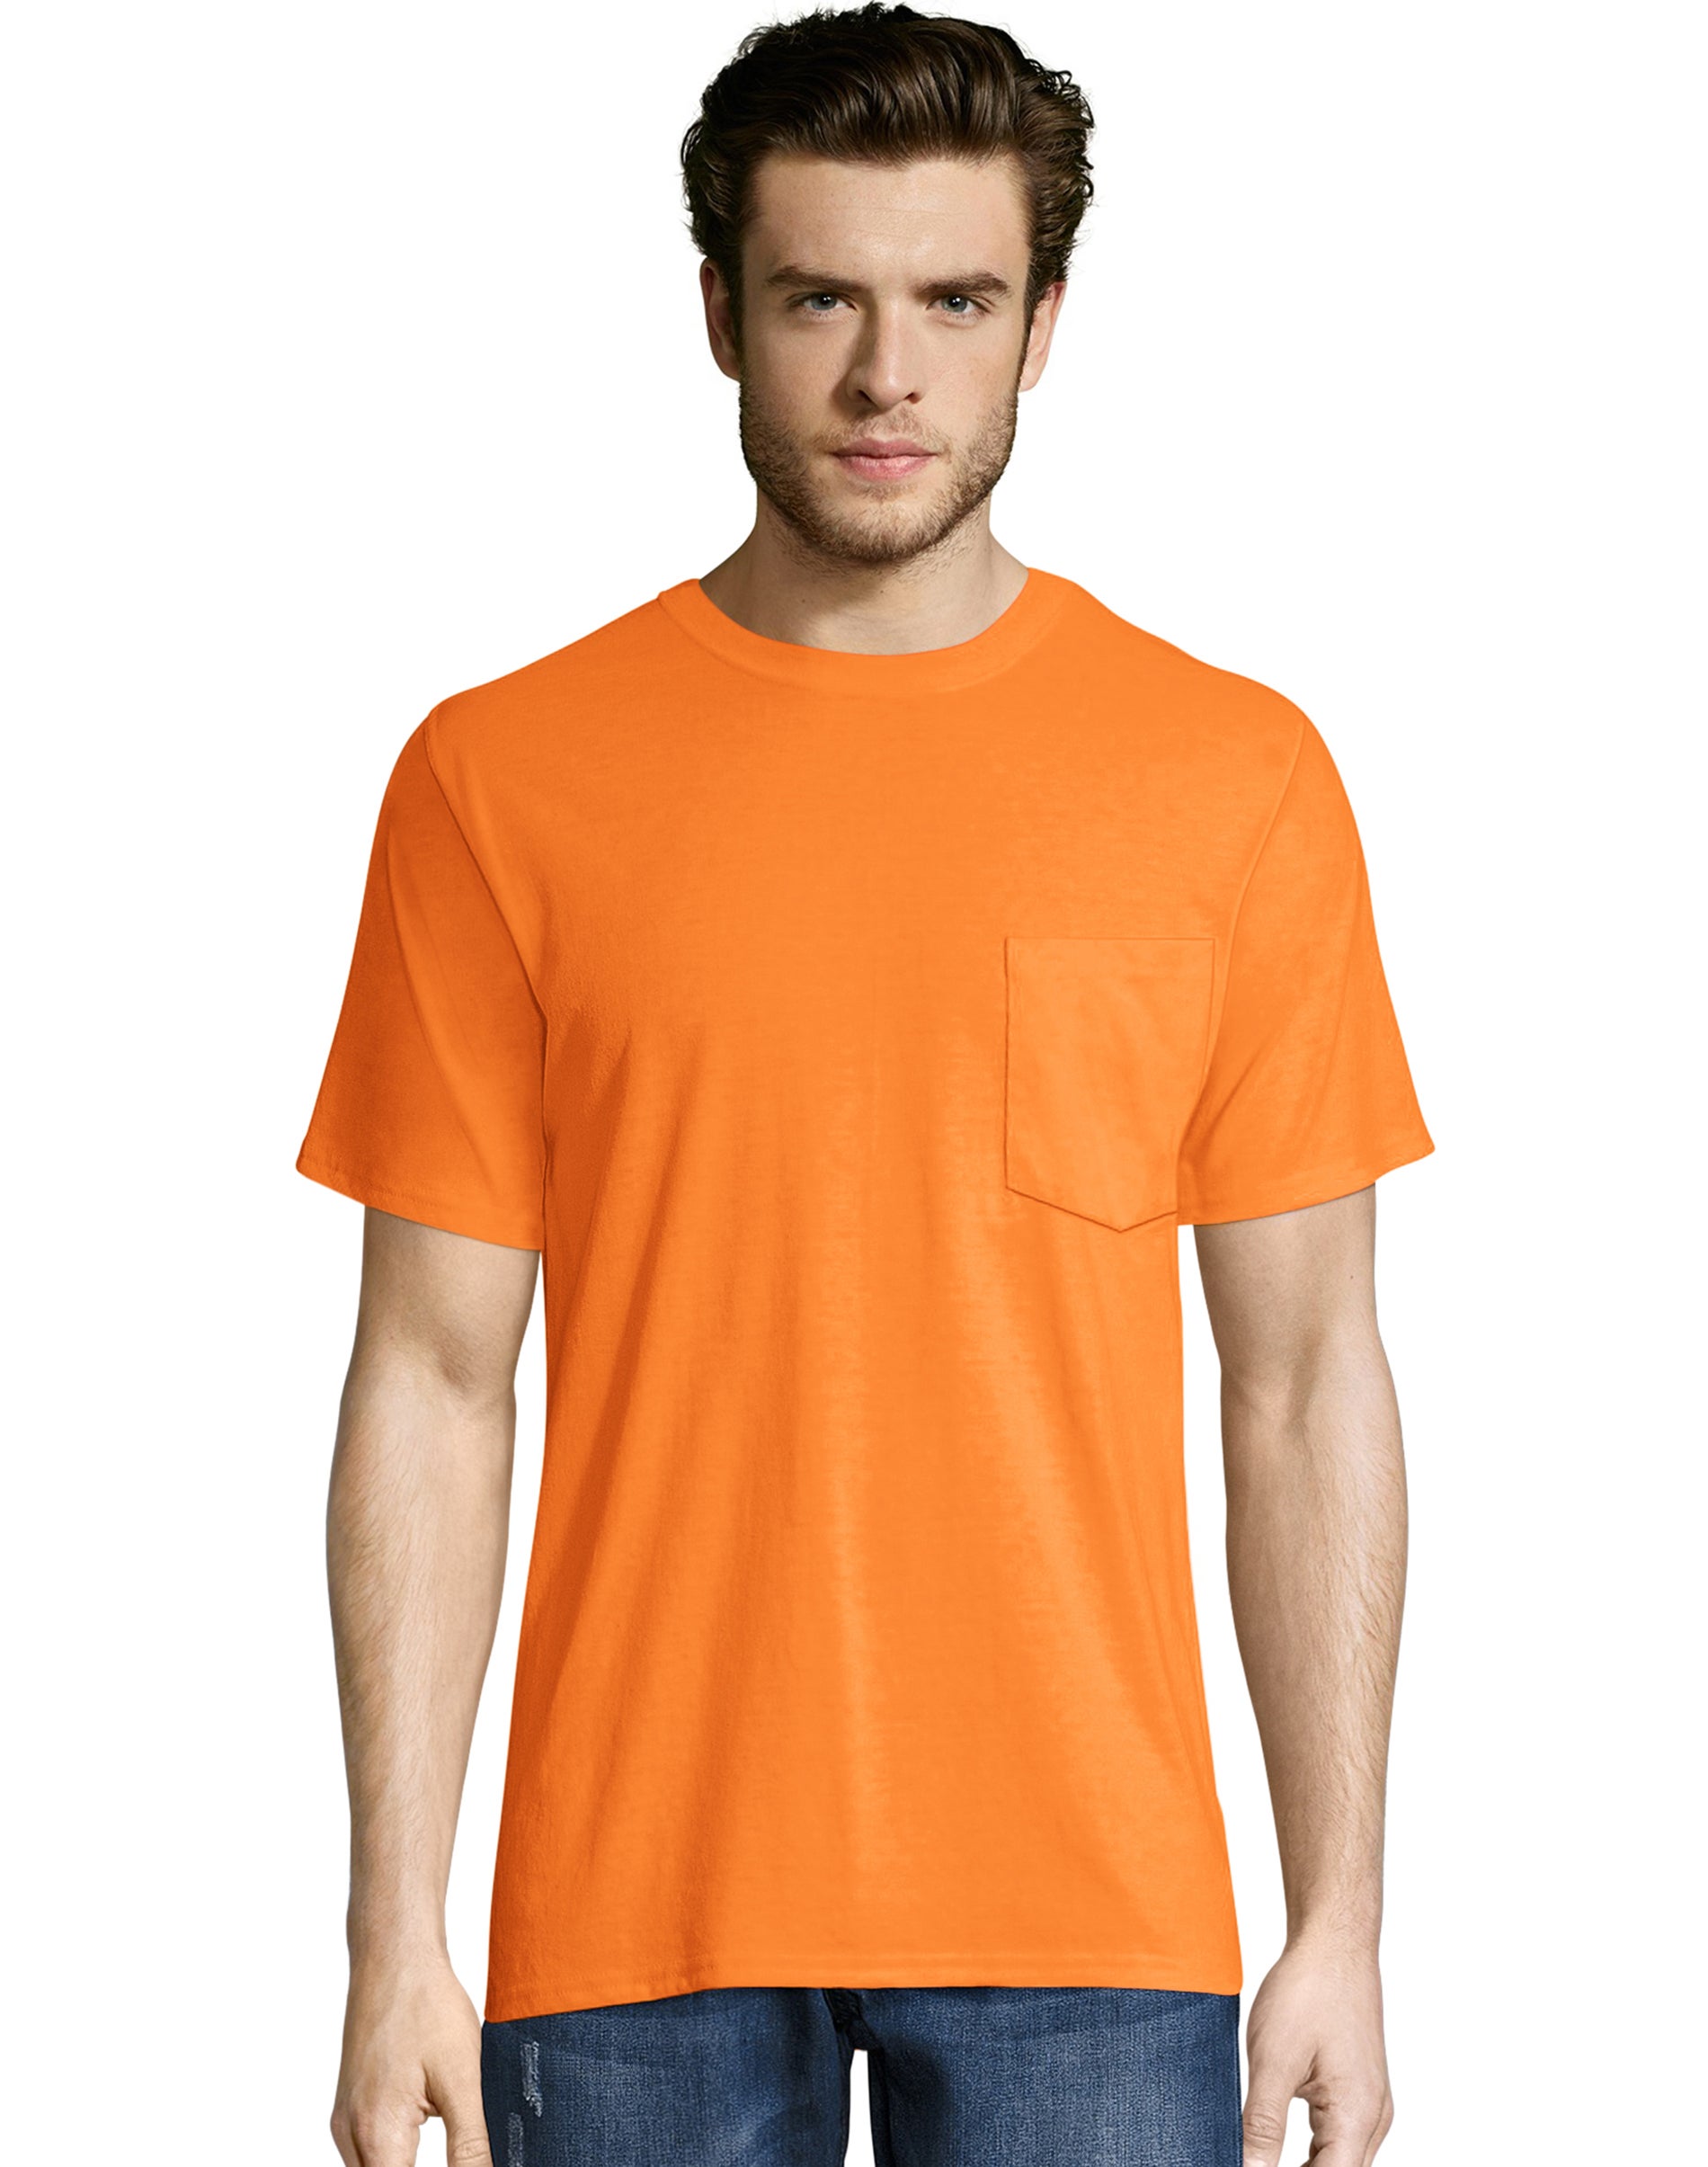 Hanes Workwear X-Temp Men's Pocket T-Shirt, 2-Pack Safety Orange M - image 1 of 5